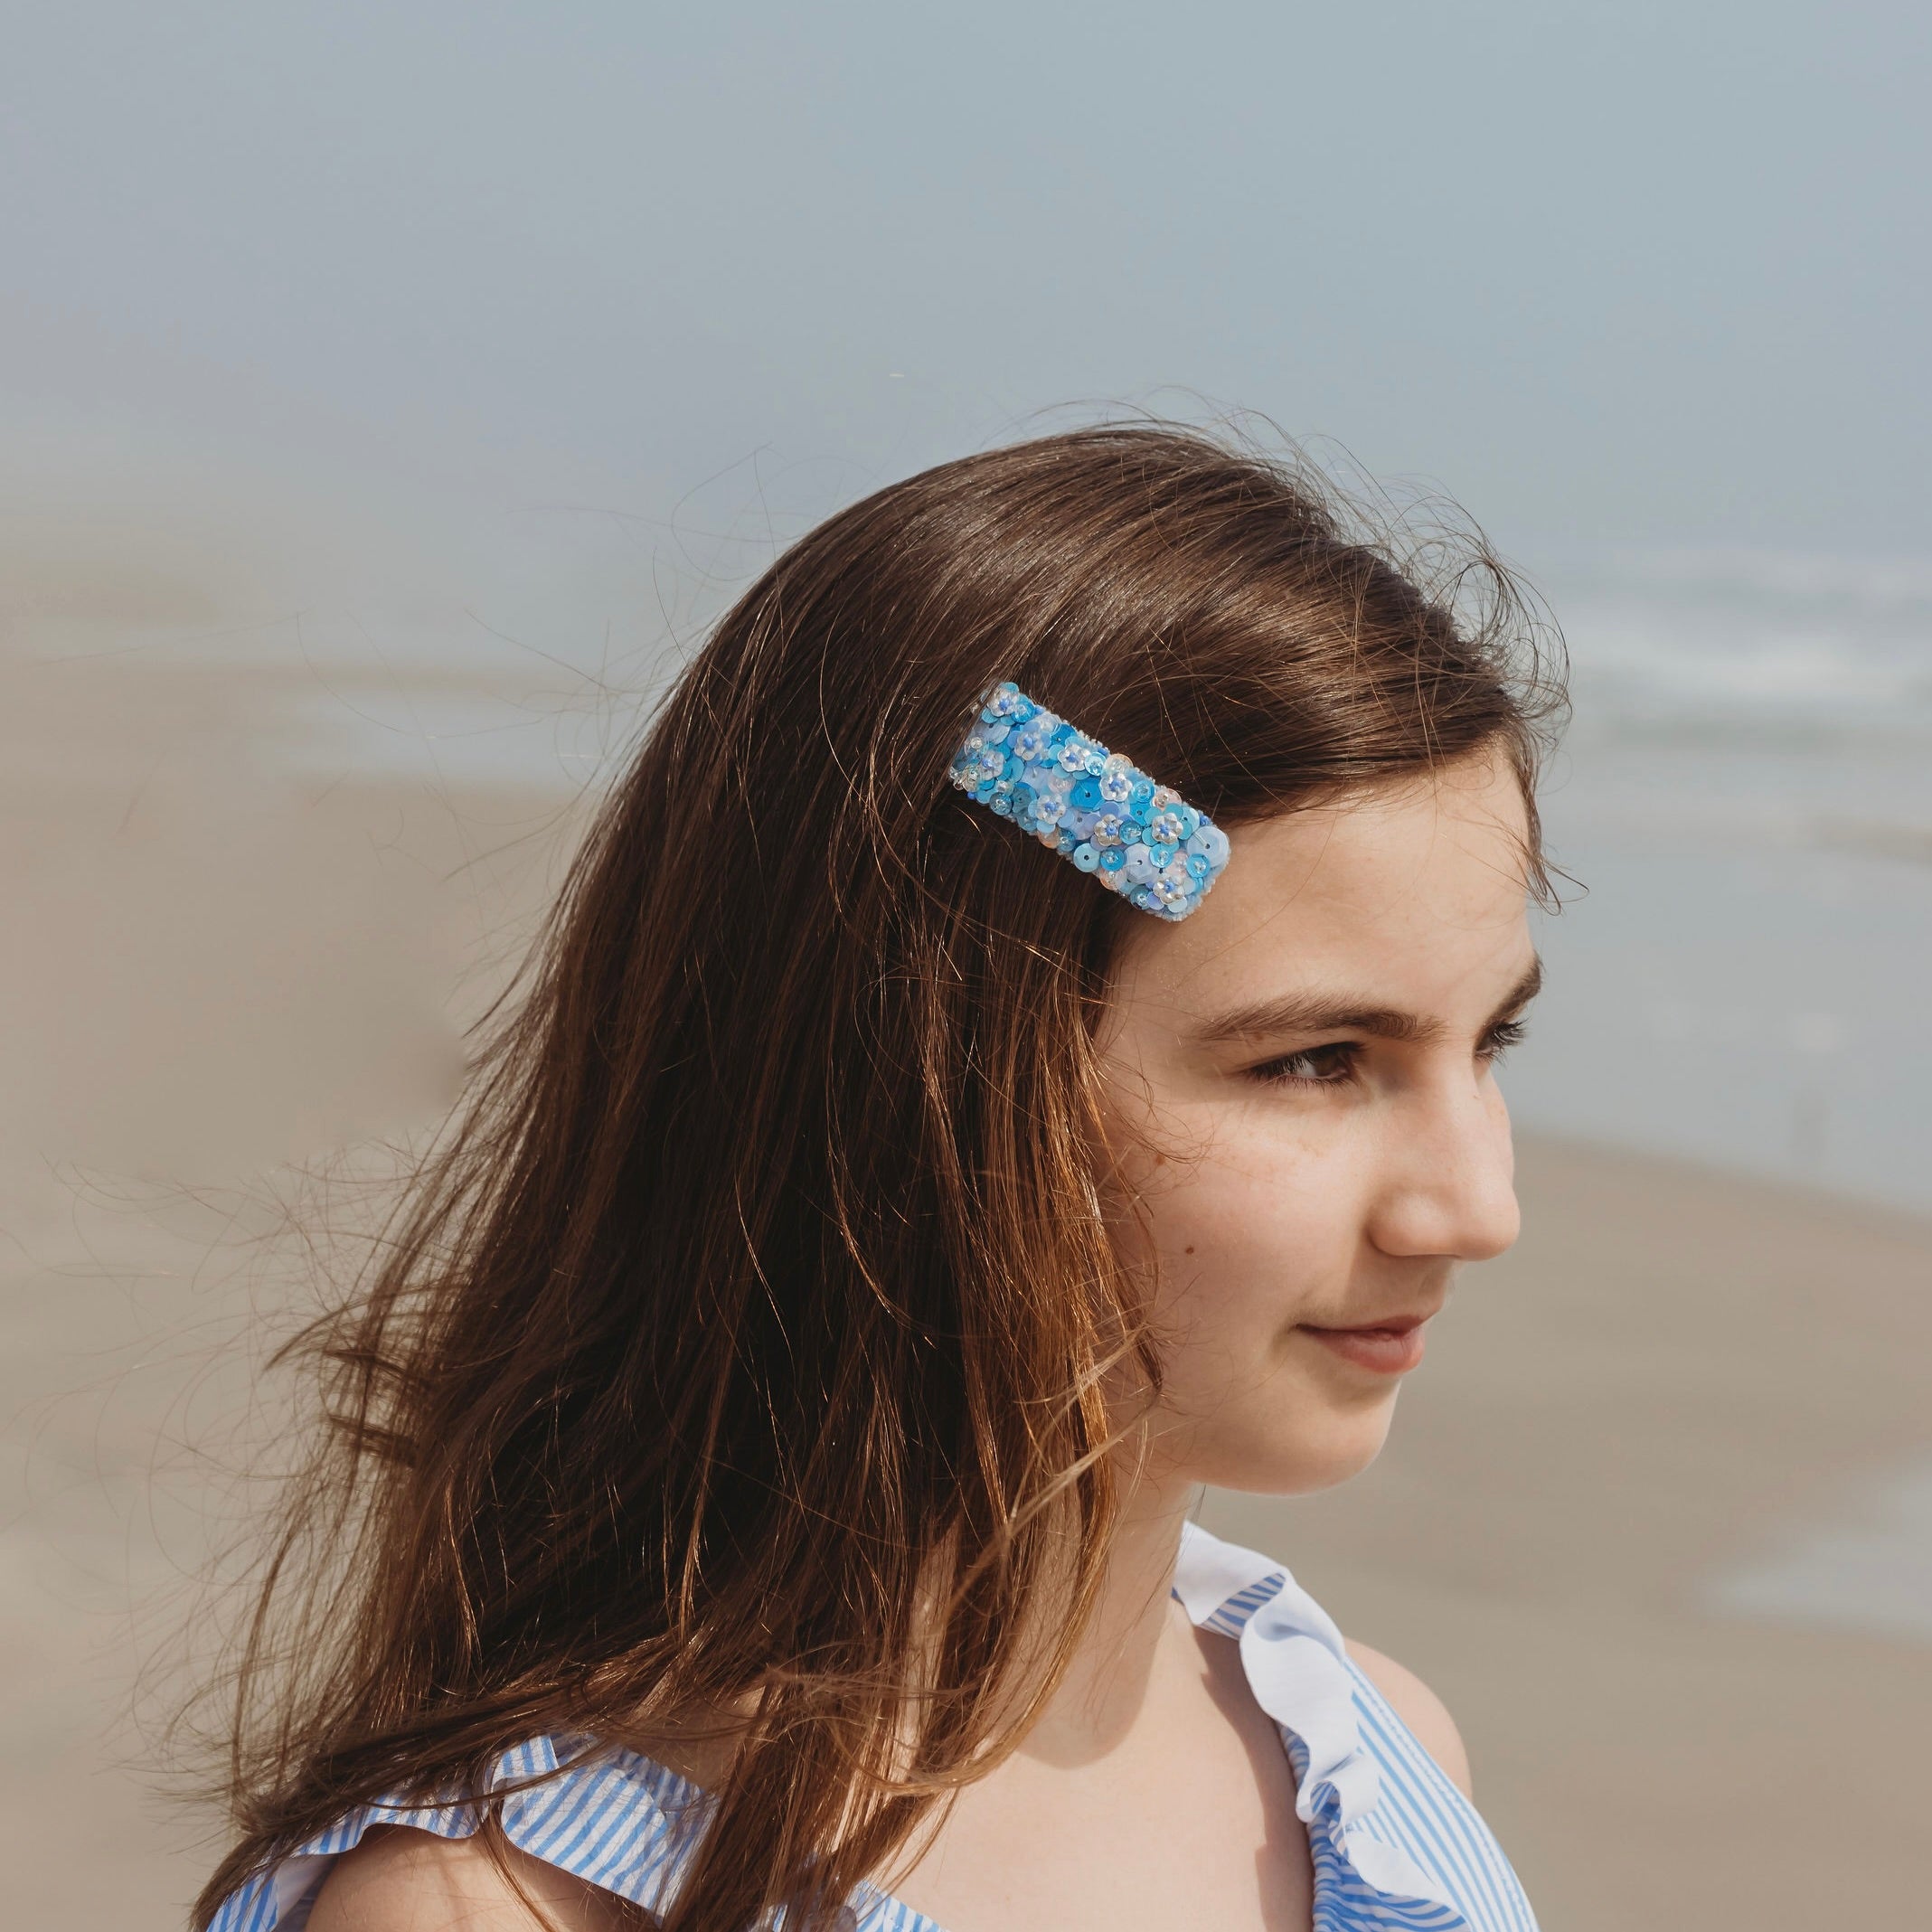 Skye rectangular hair clip modelled by a teen girl.